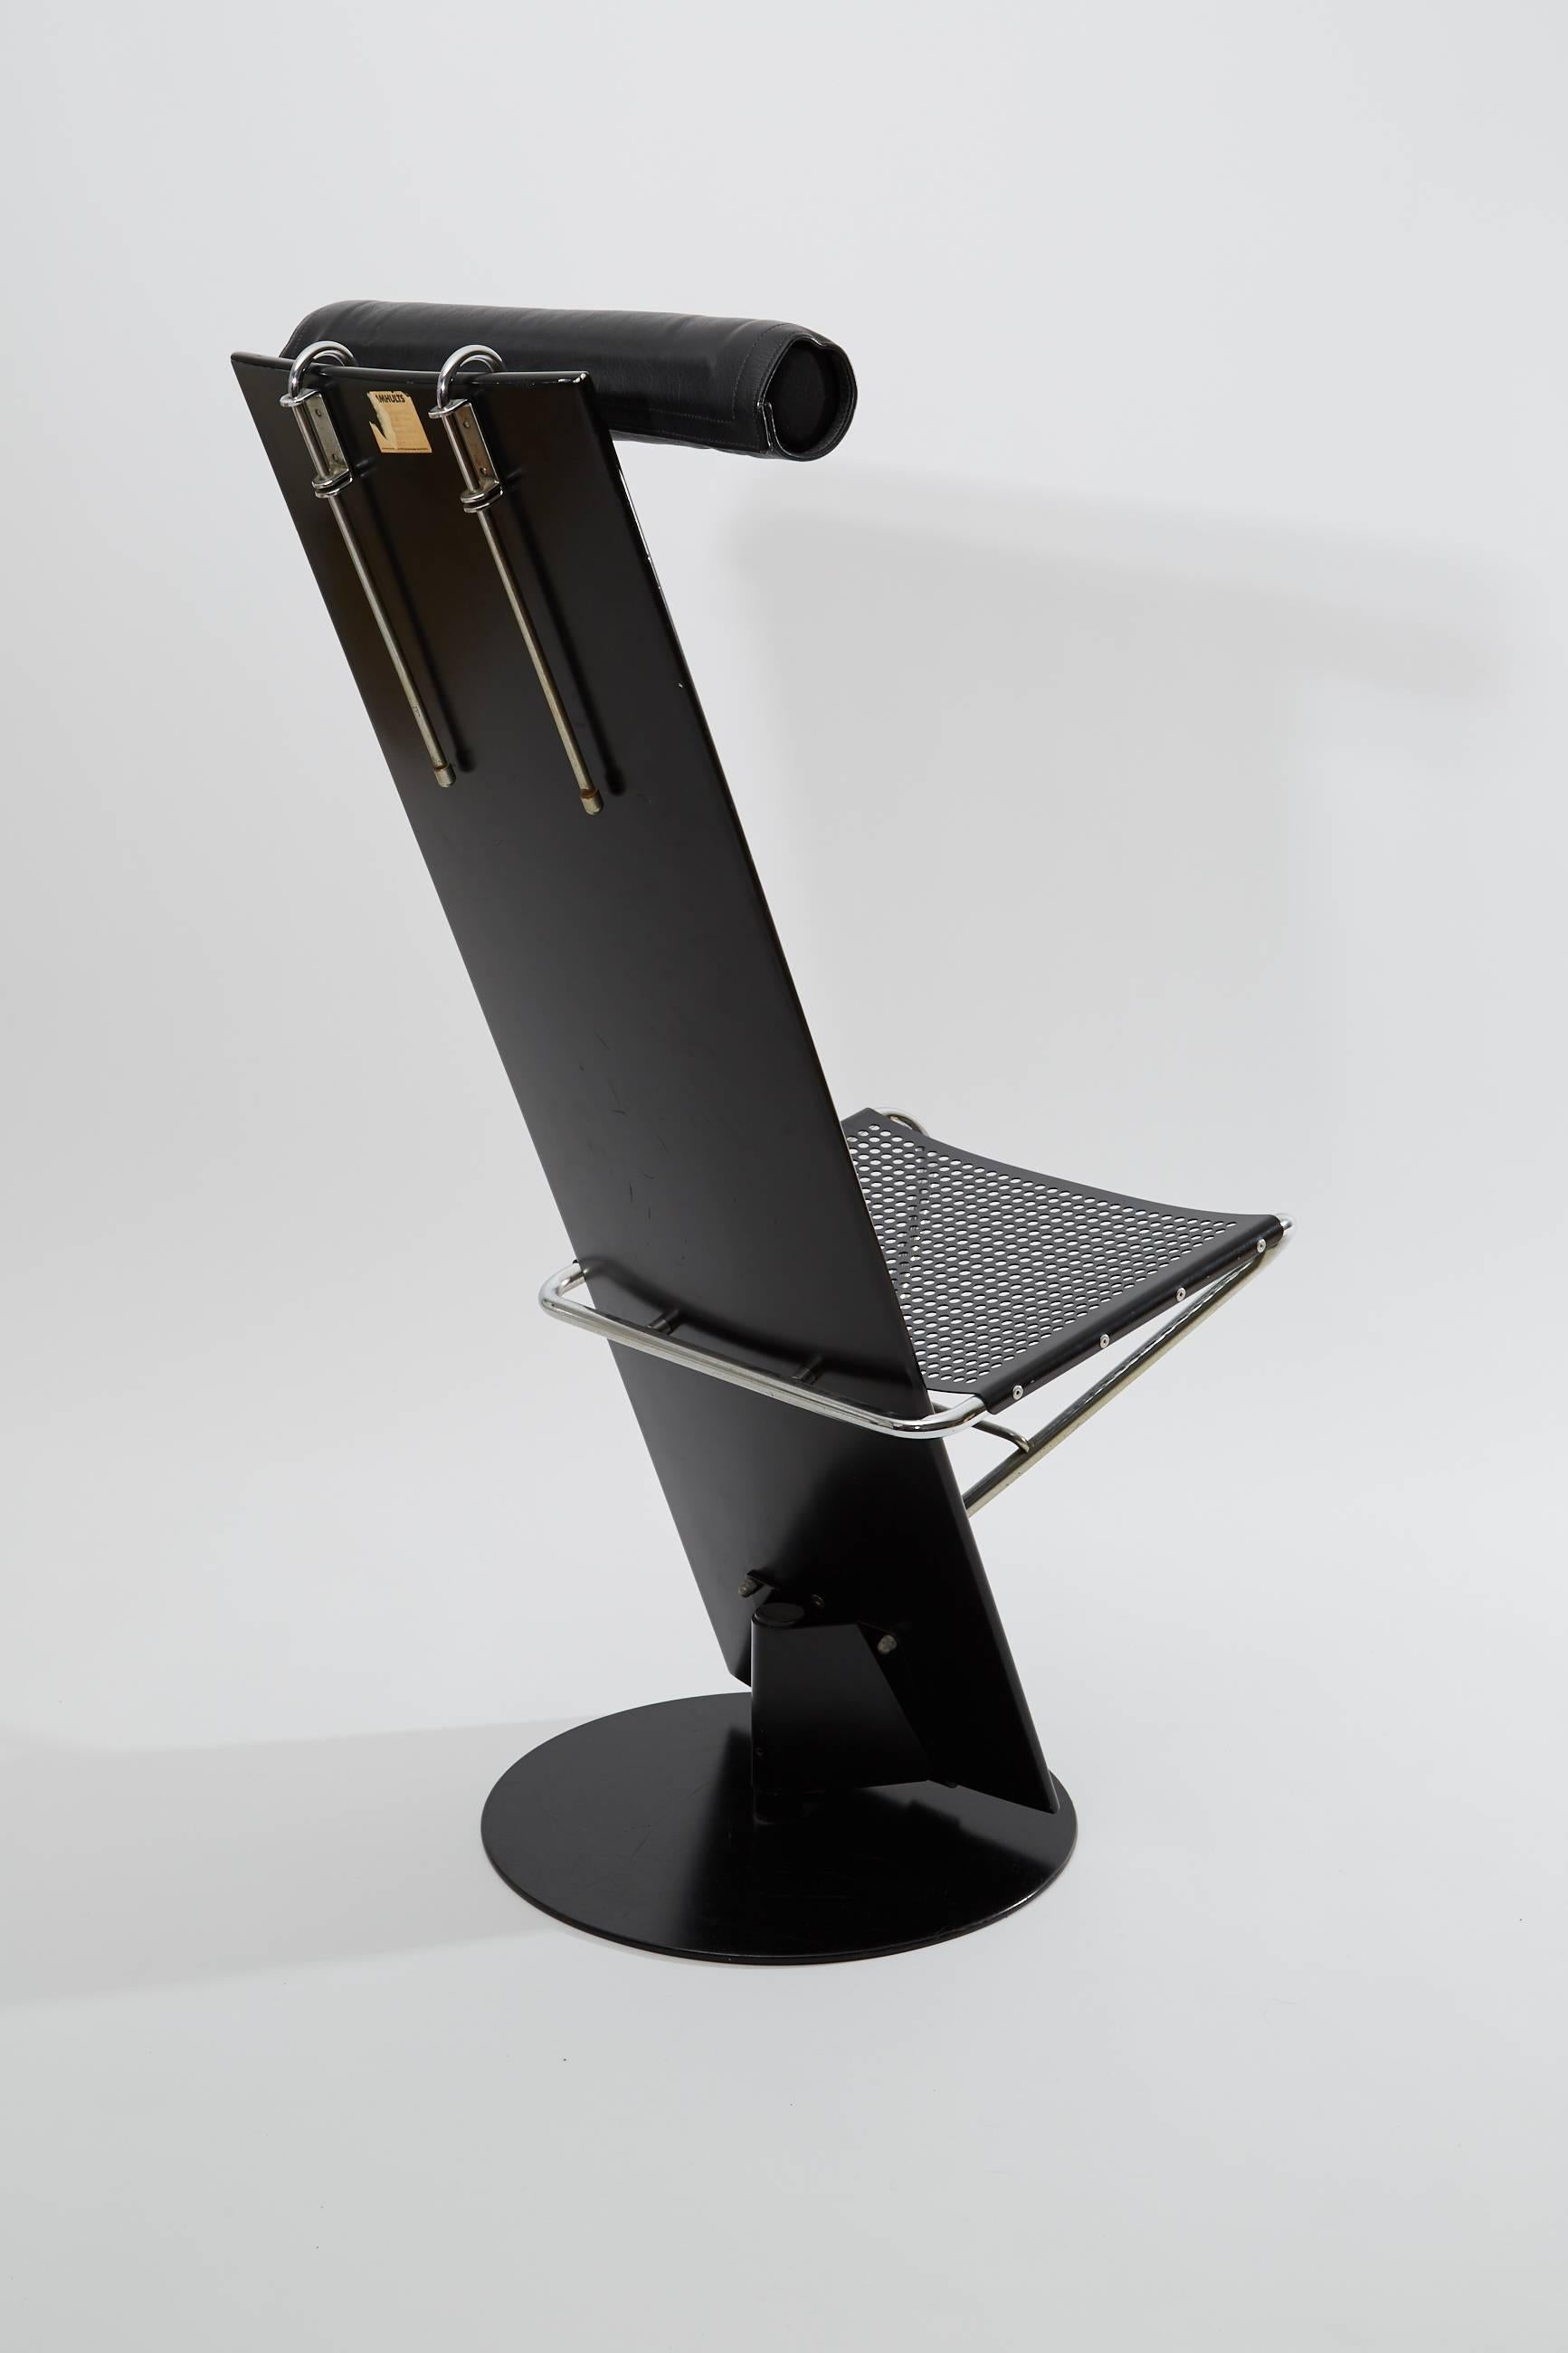 Lindau Lindekrantz Lammhults Black Planka Swivel Chair in Wood Metal and Leather For Sale 2